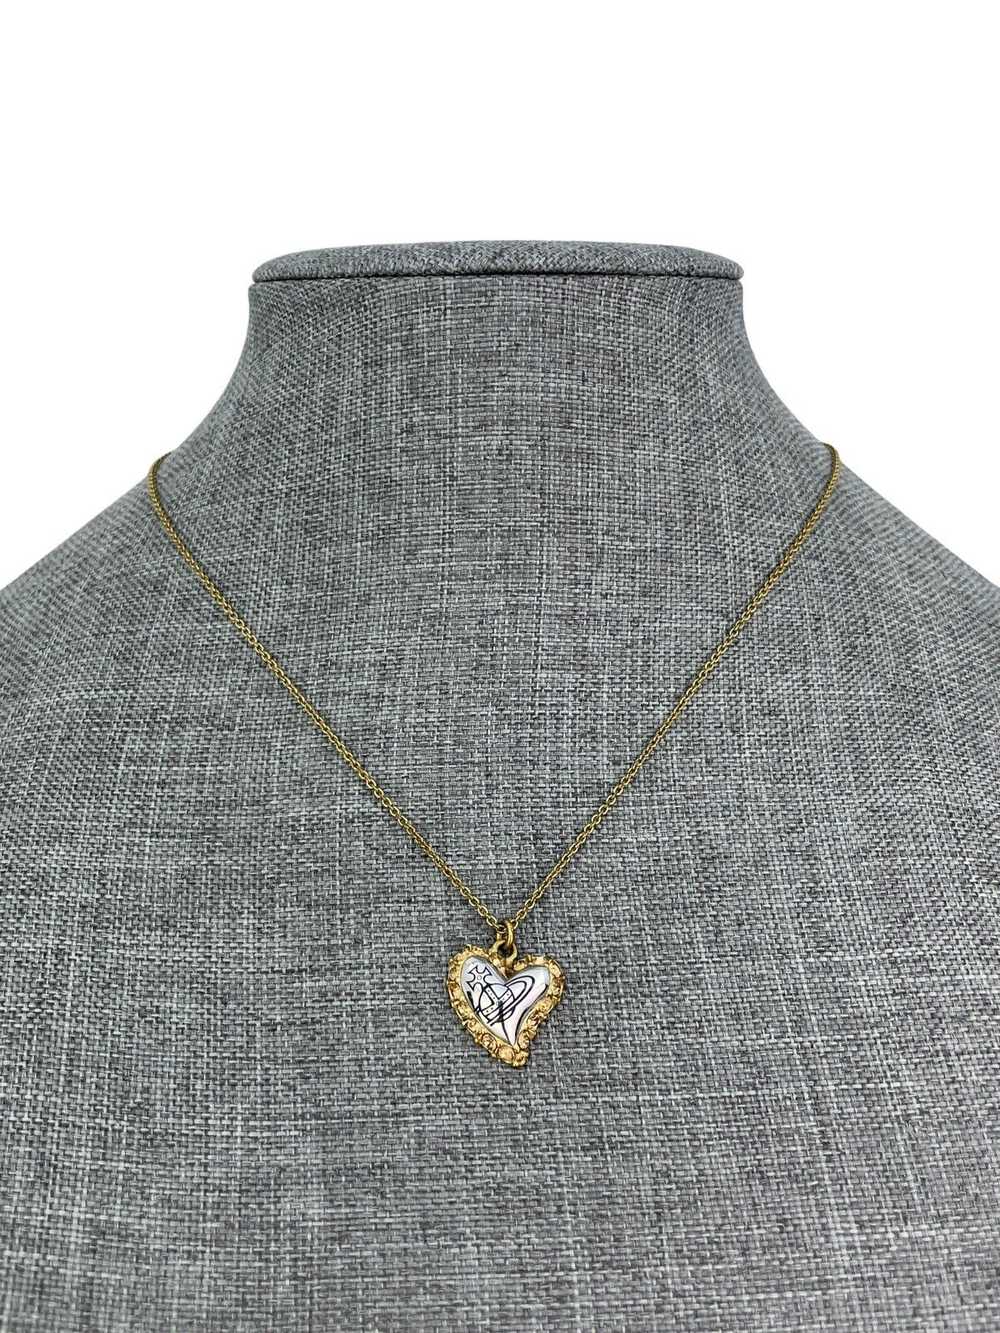 Vivienne Westwood Crystal Heart Orb Necklace - image 2